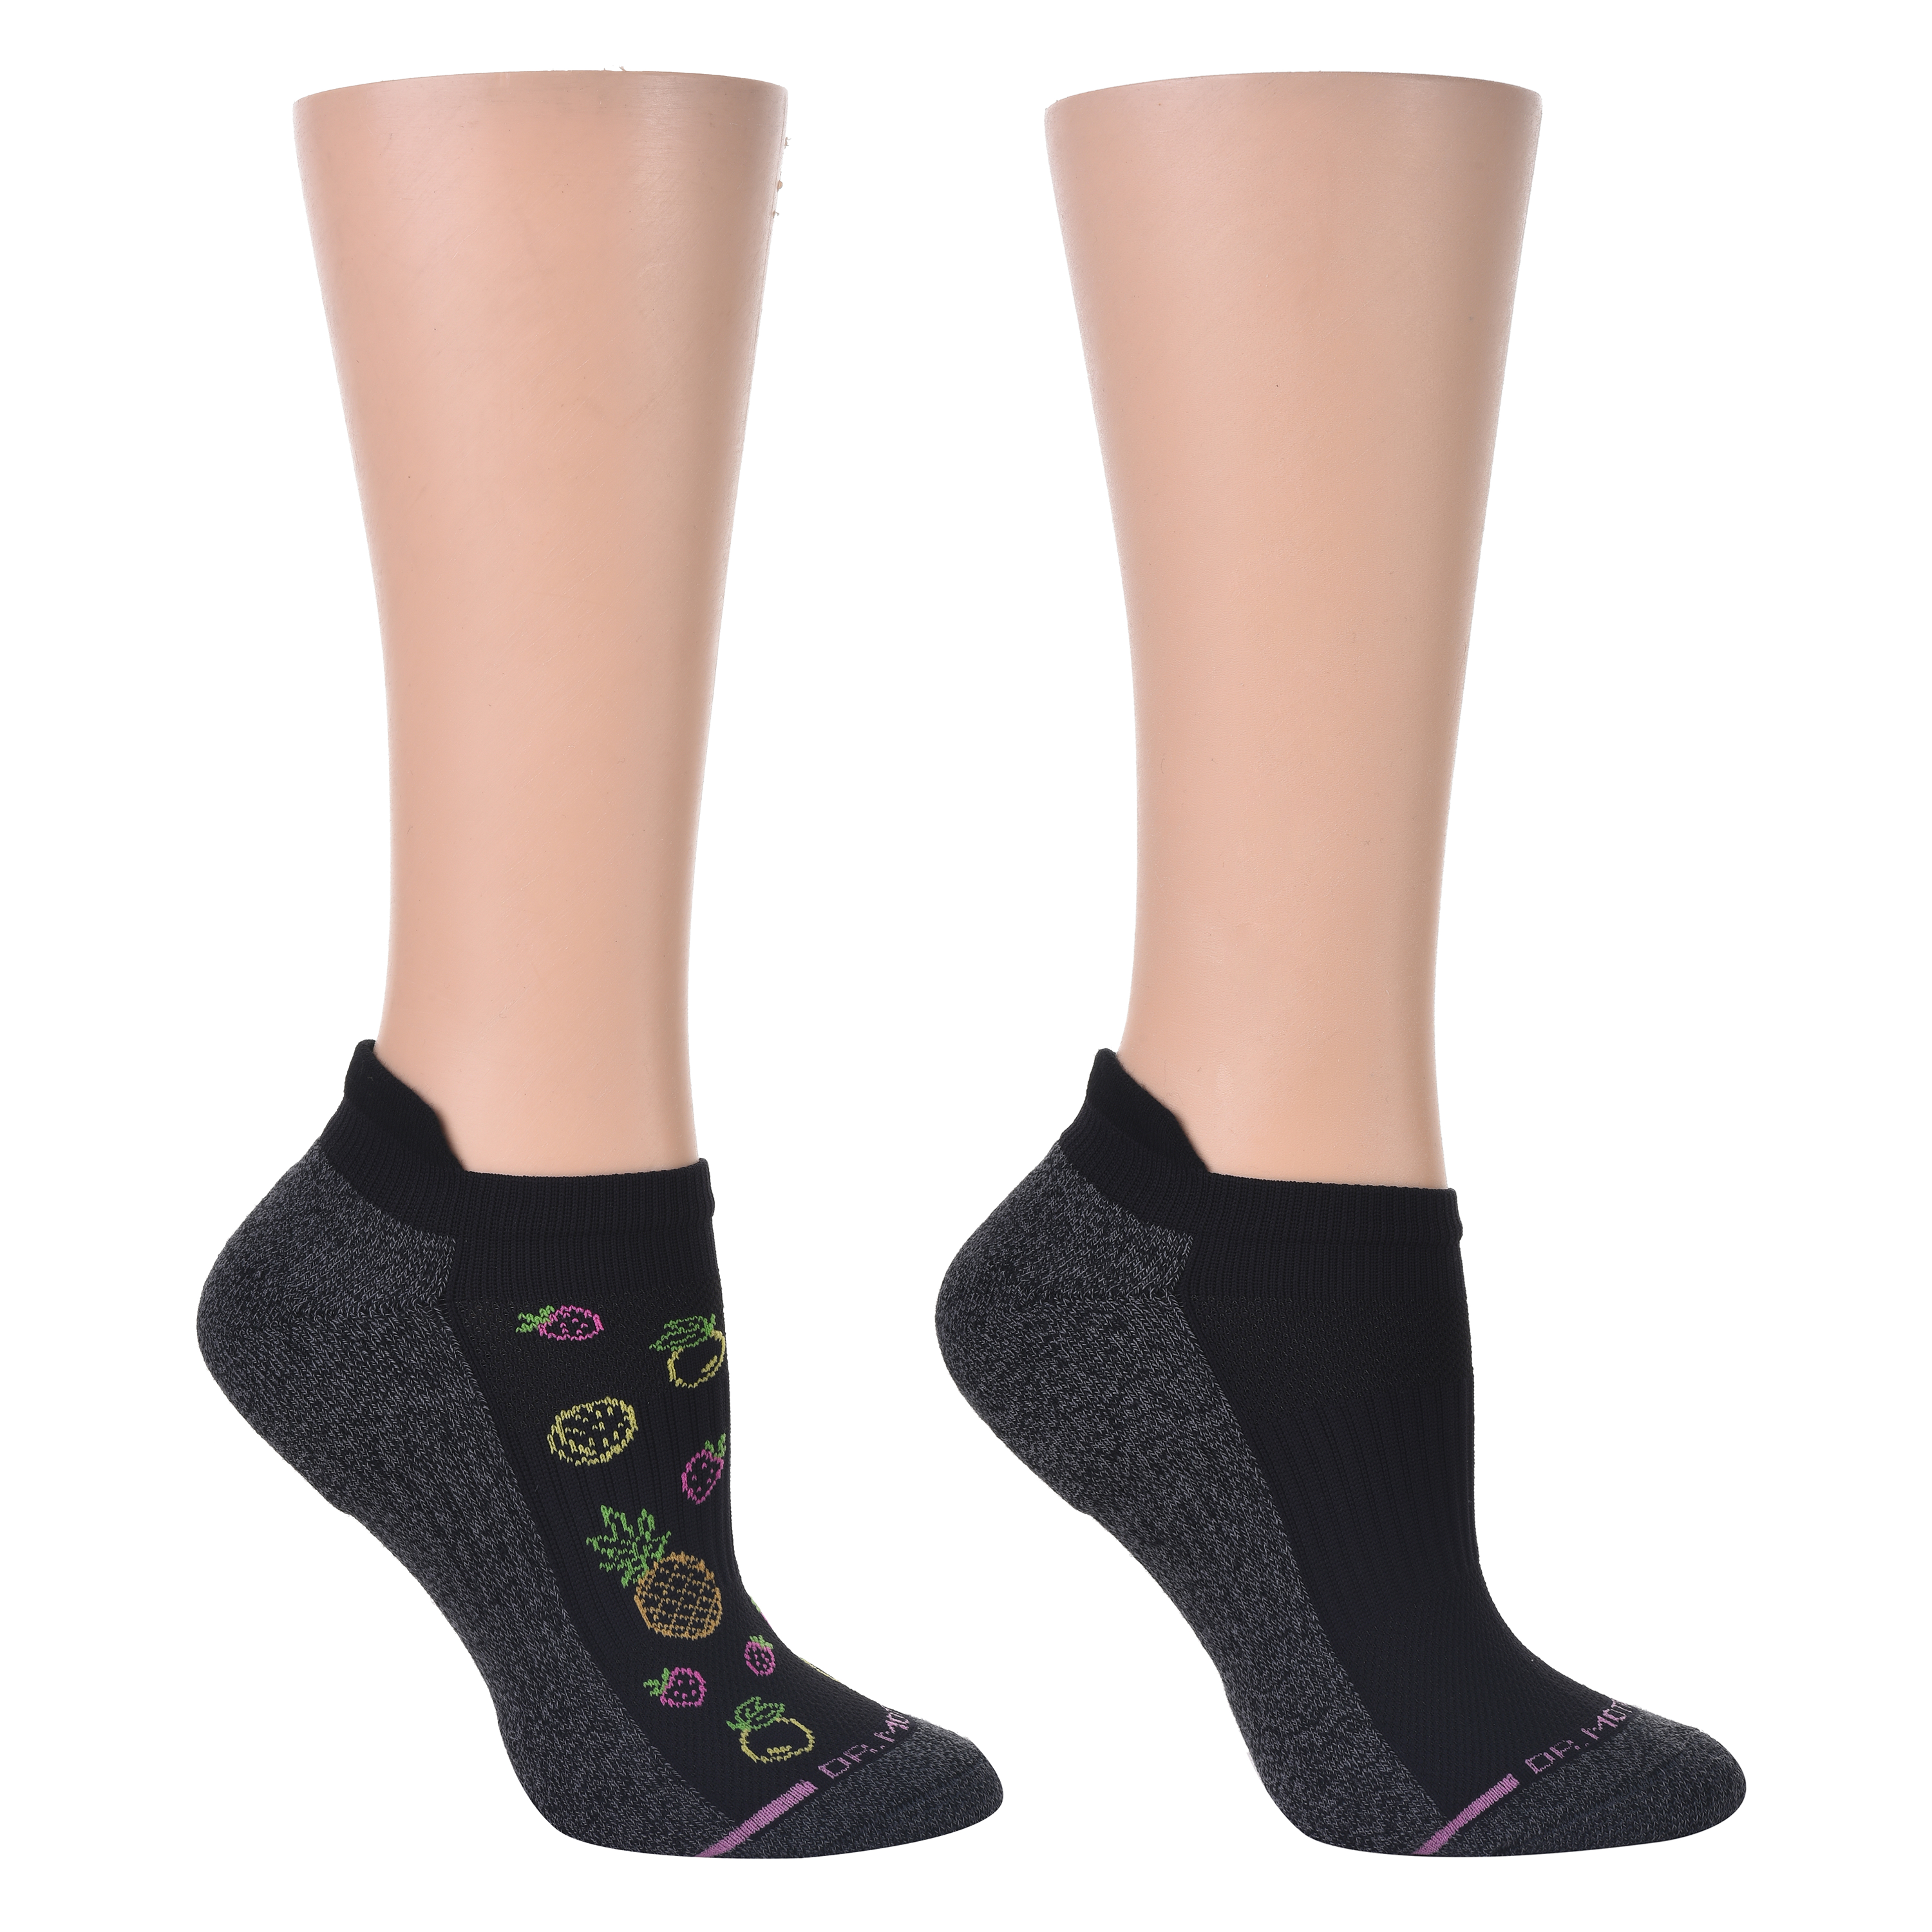 Outline Fruits | Ankle Compression Socks For Women